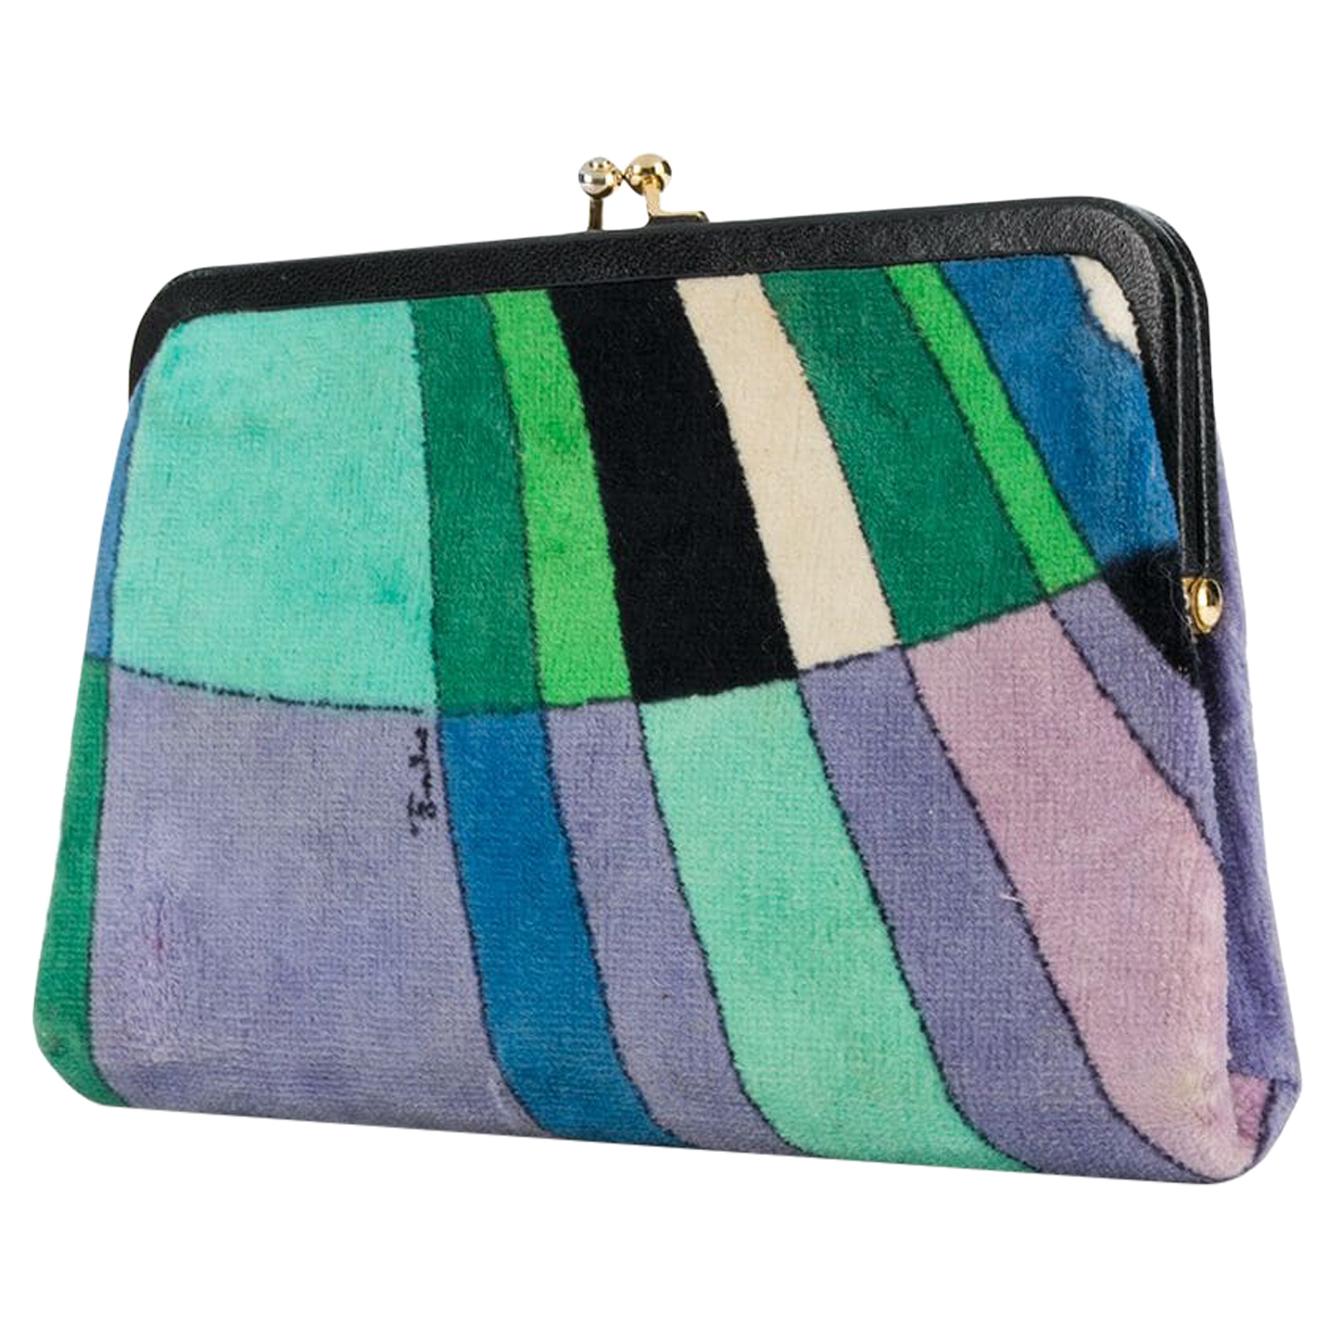 Emilio Pucci Multicolour Velvet Clutch Bag